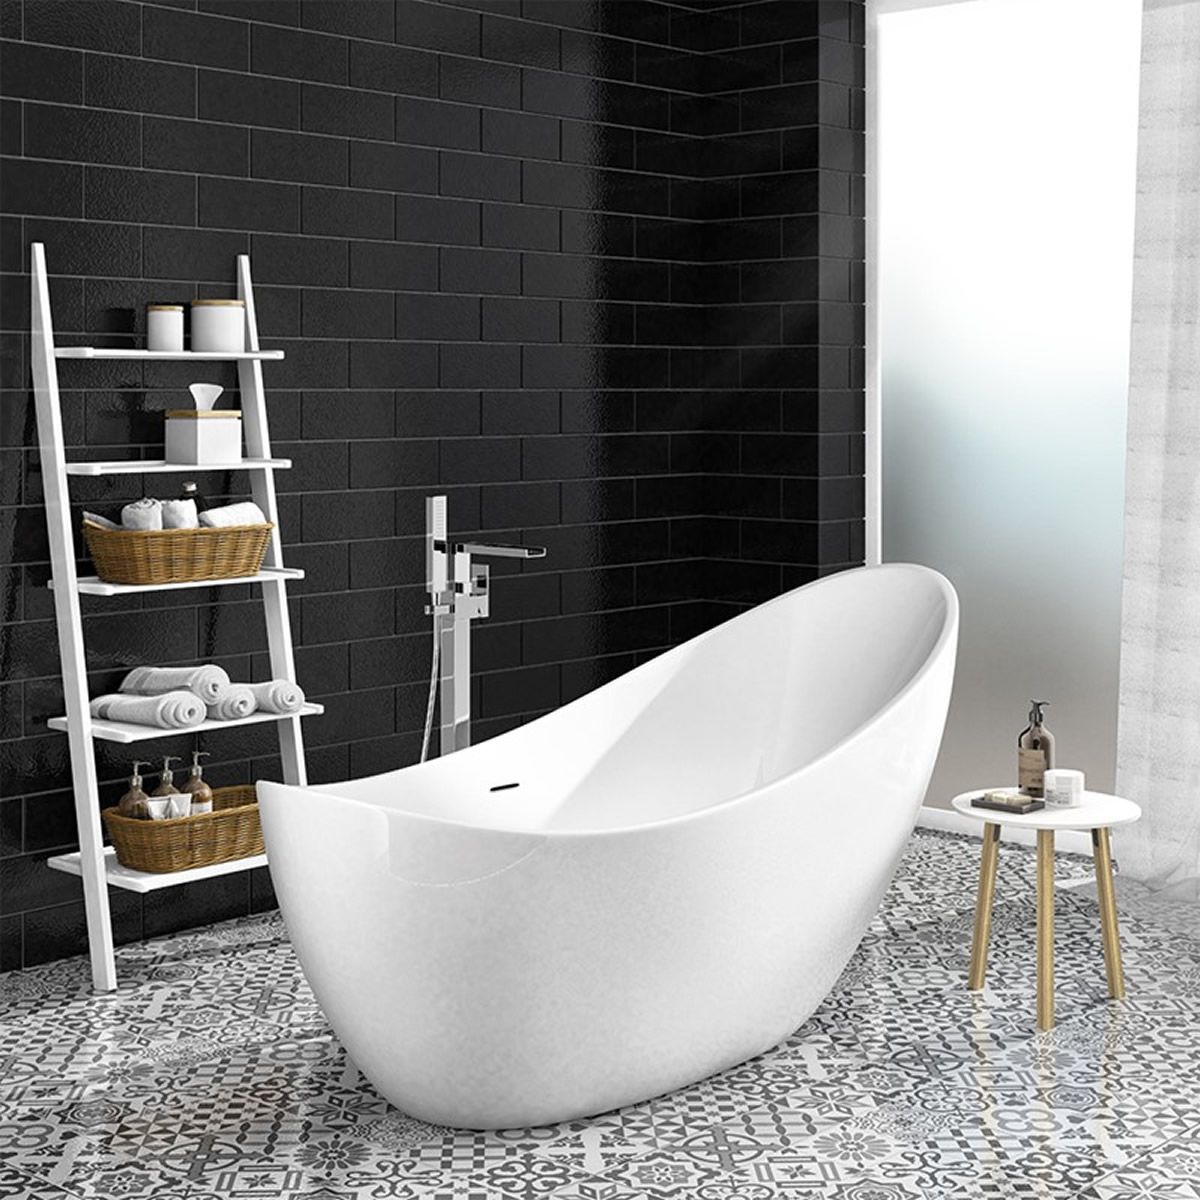 Modern 2 Piece Freestanding Bathtubs |MAAX Tubs USA